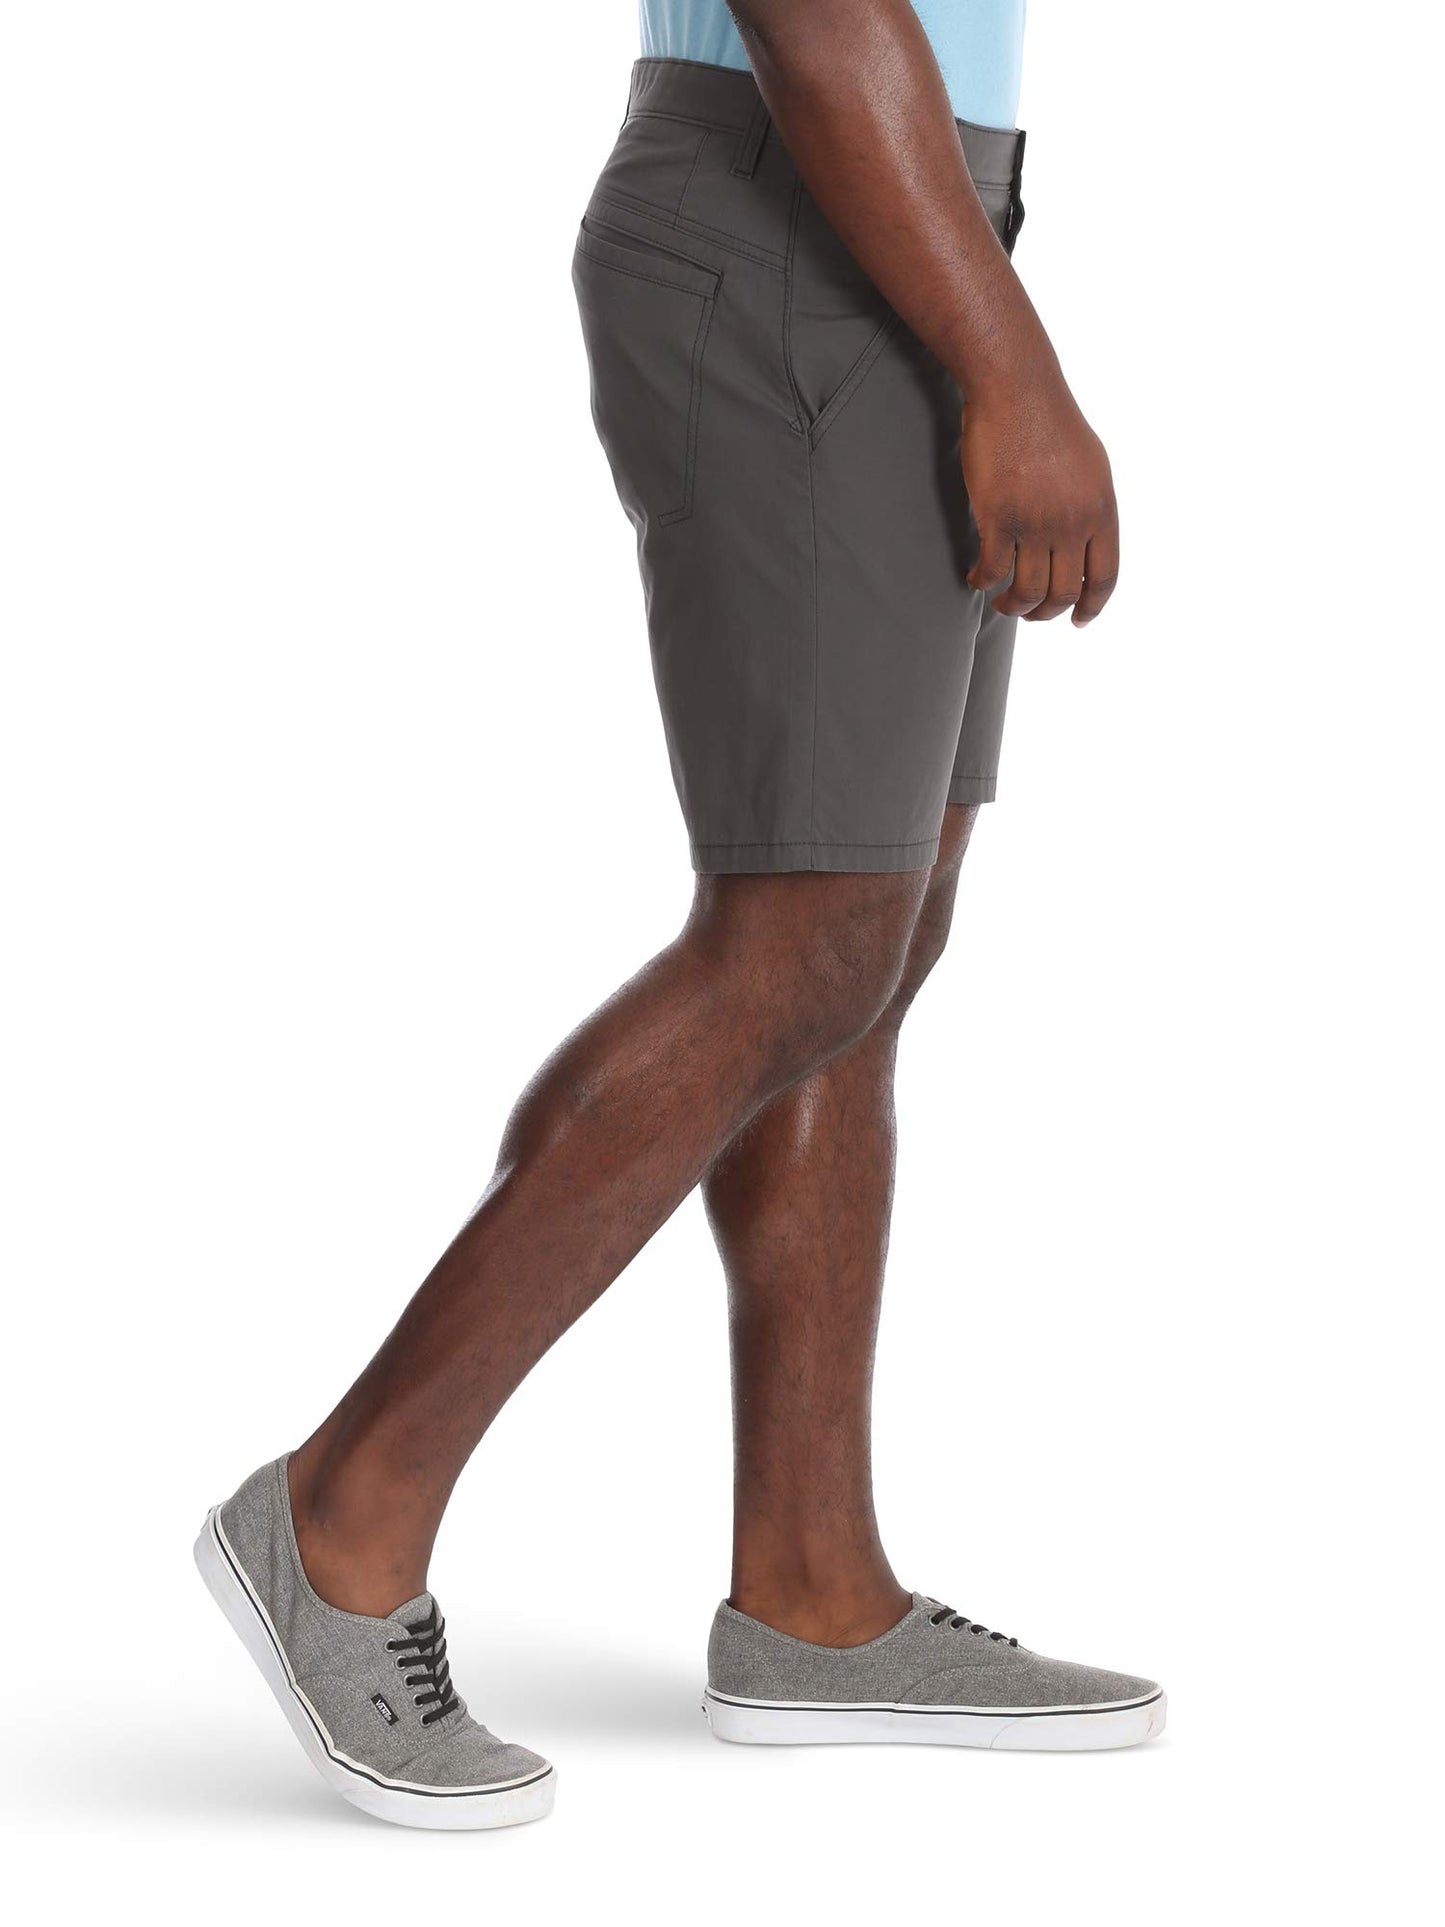 Wrangler Authentics Men's Performance Comfort Flex Flat Front Short, Anthracite, 36